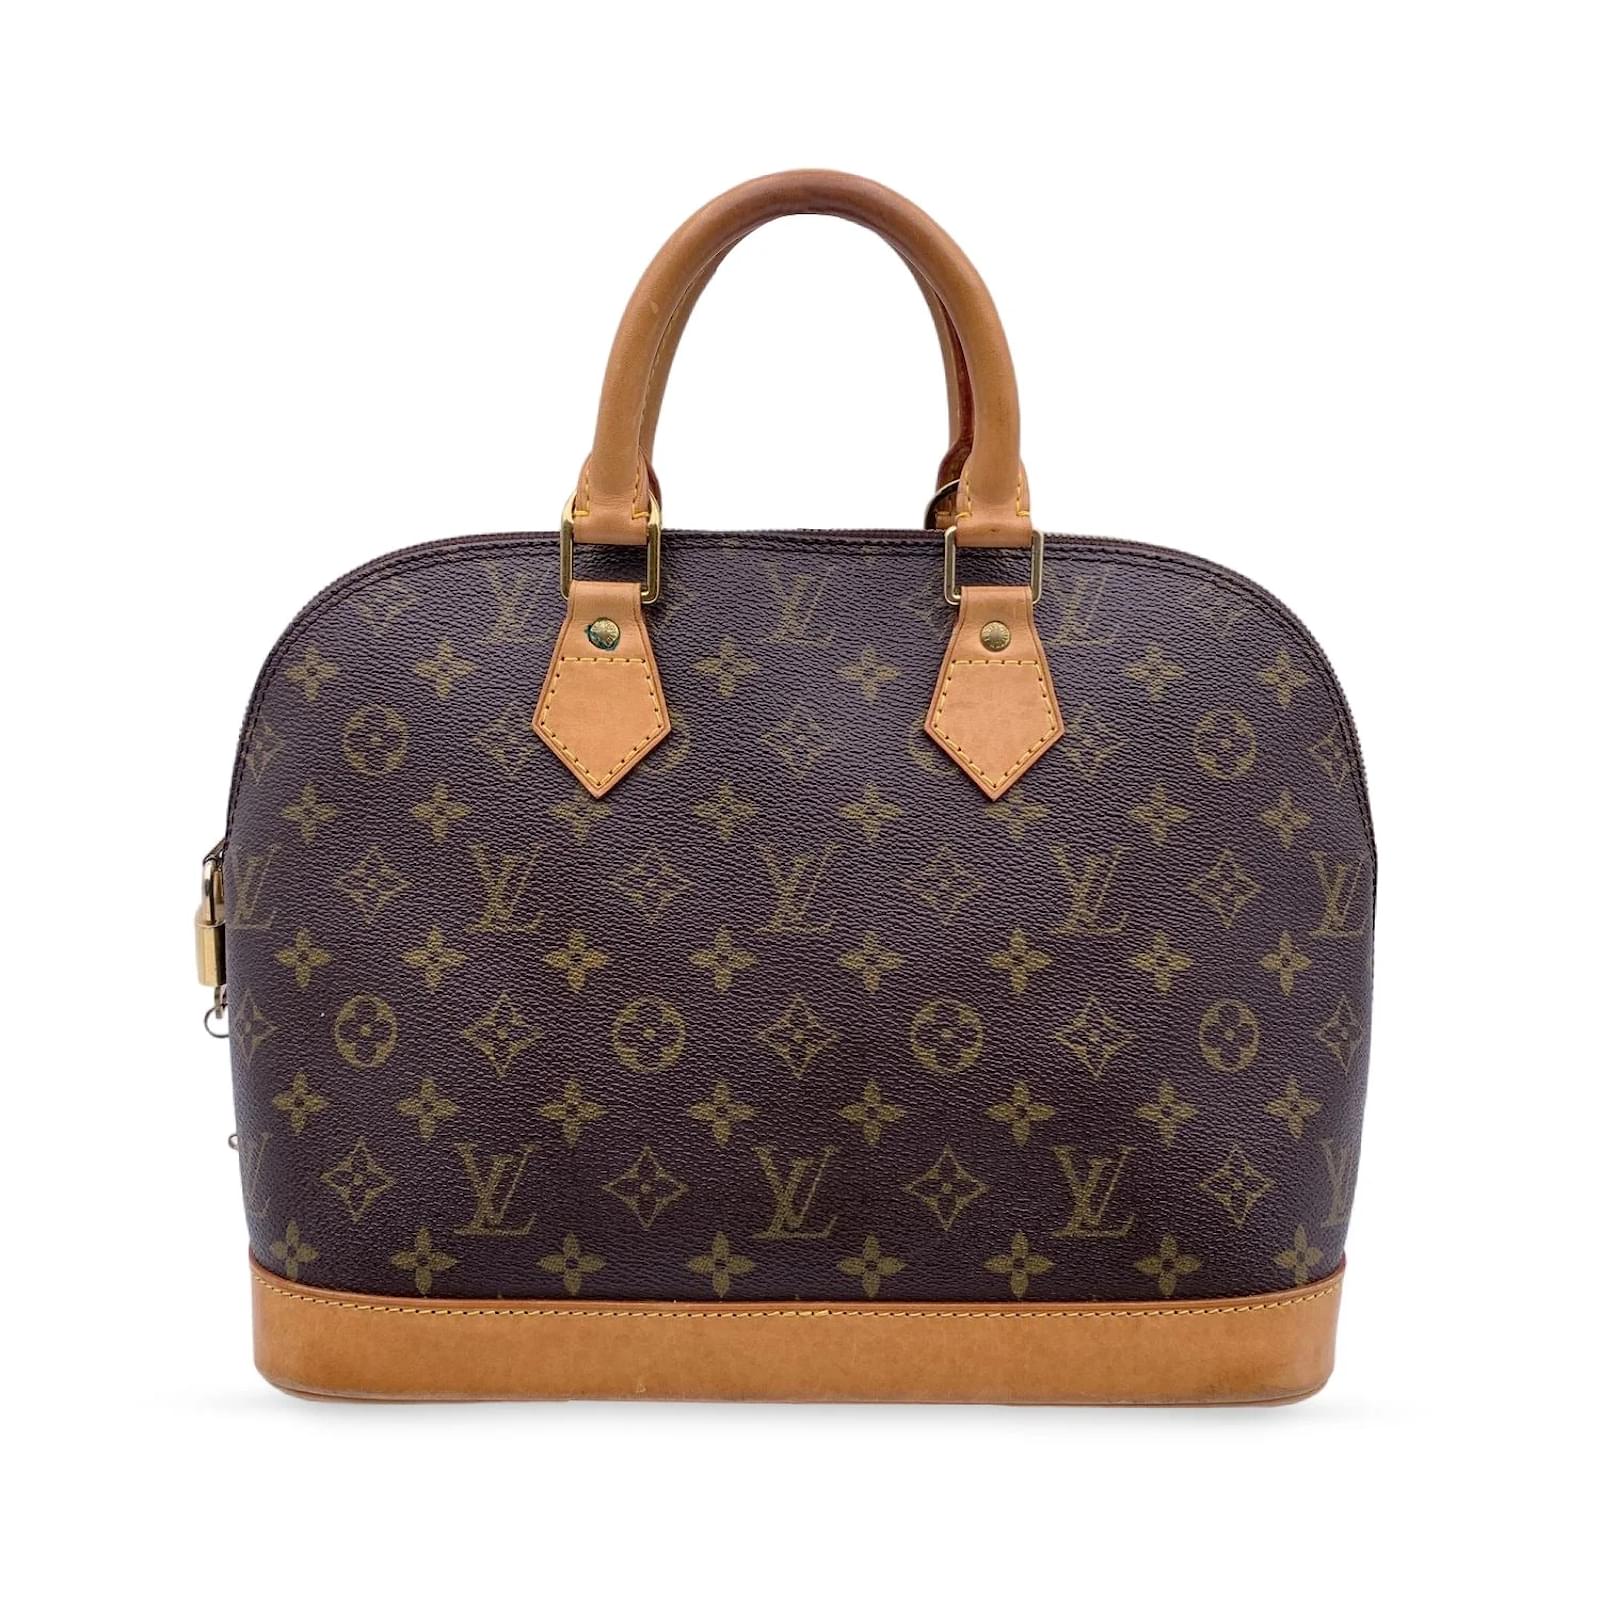 classic lv handbag